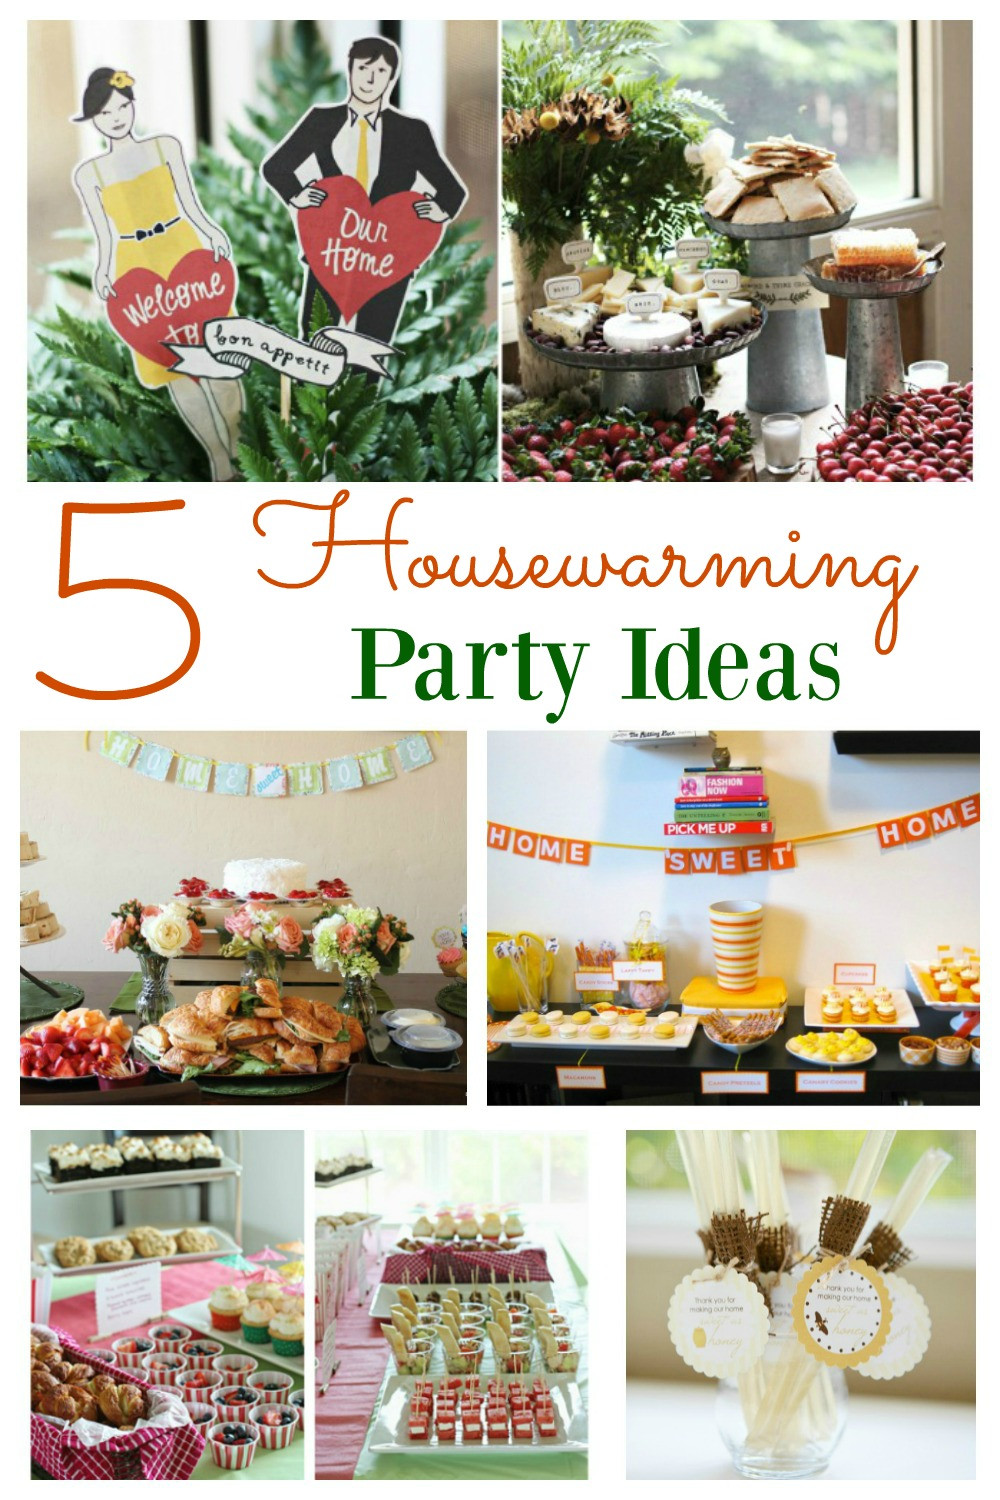 Housewarming Party Food Ideas
 Housewarming Party Ideas